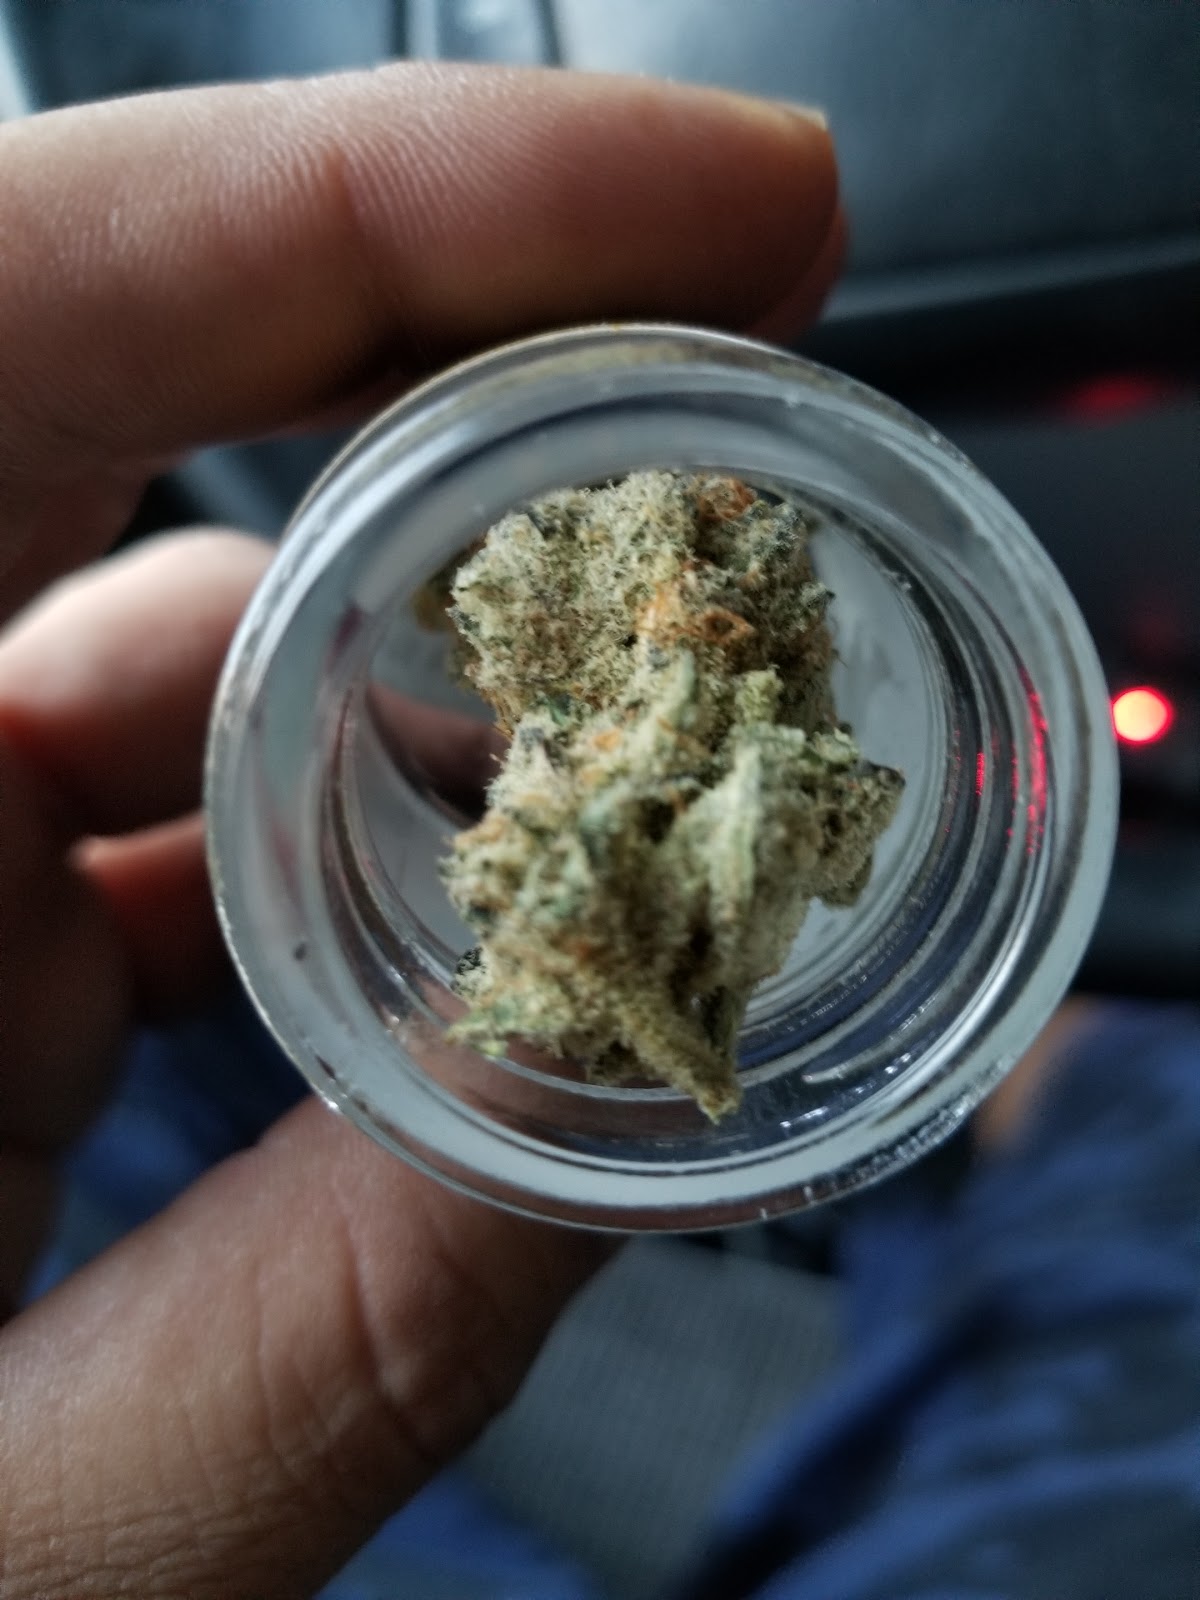 California Cannabis Soto Dispensary